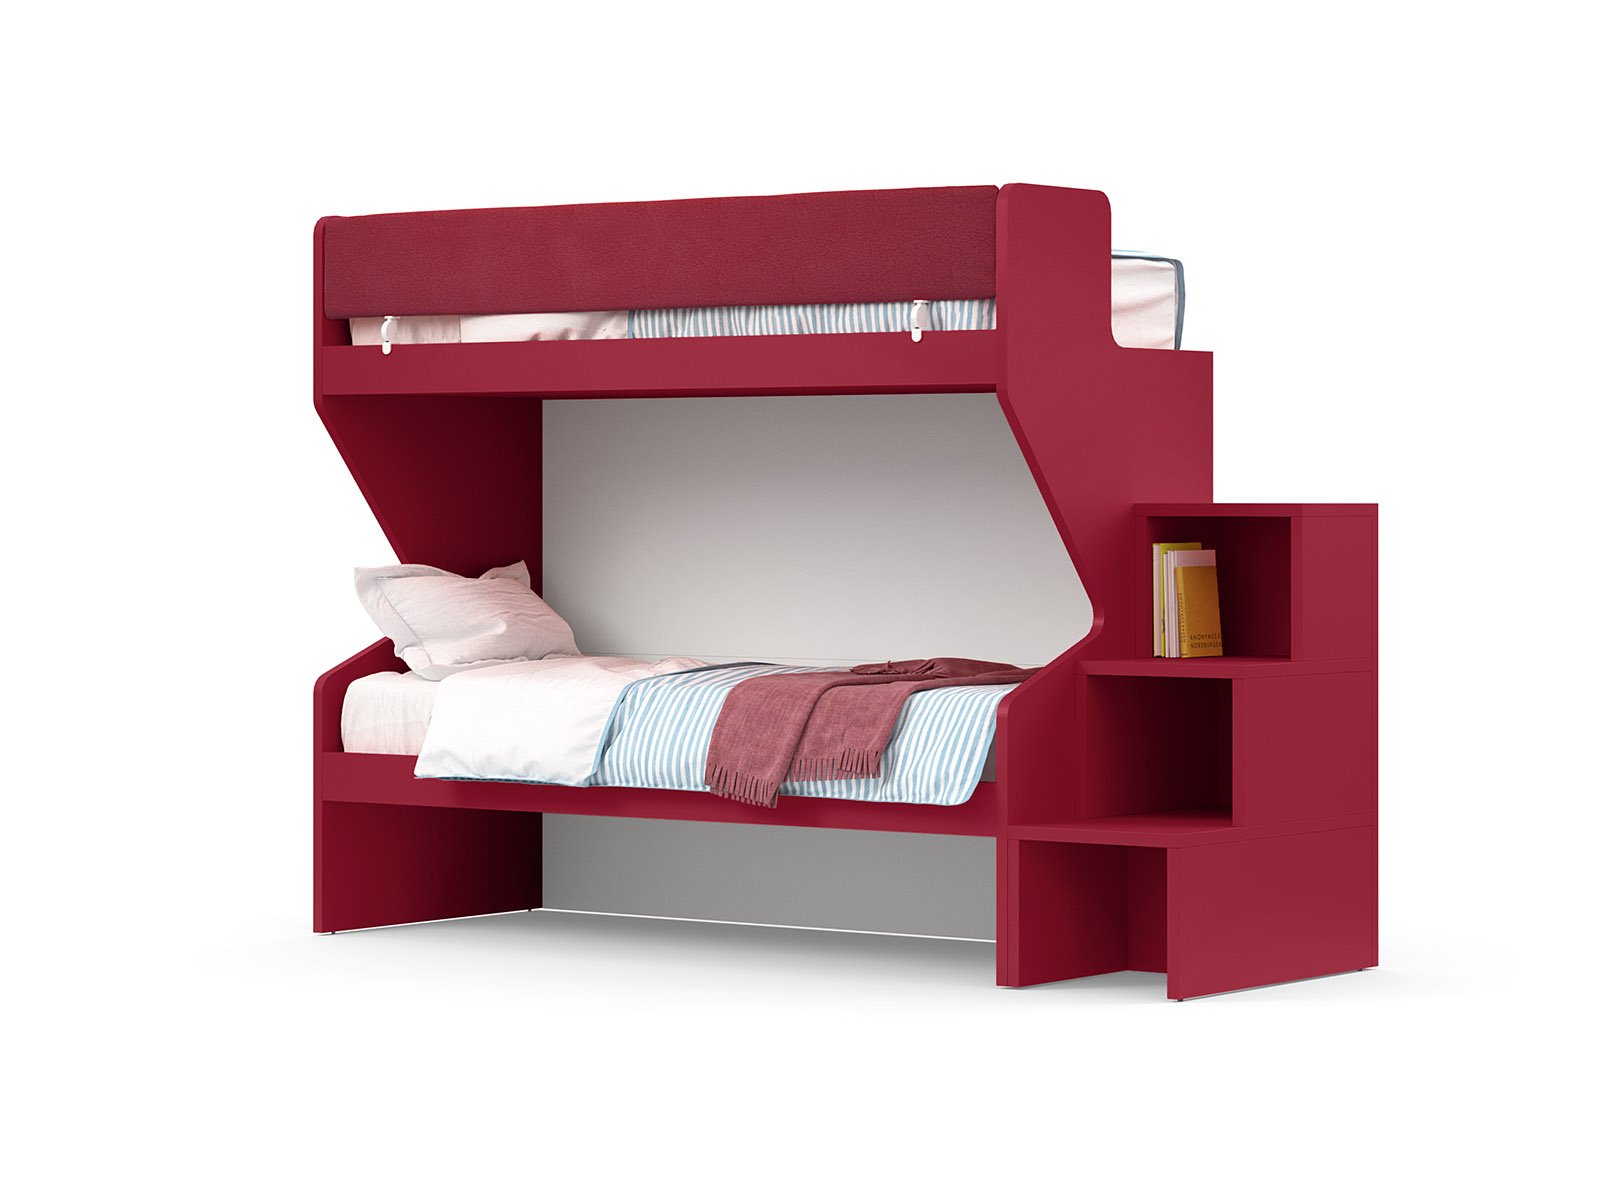 Gino Maxi bunk bed